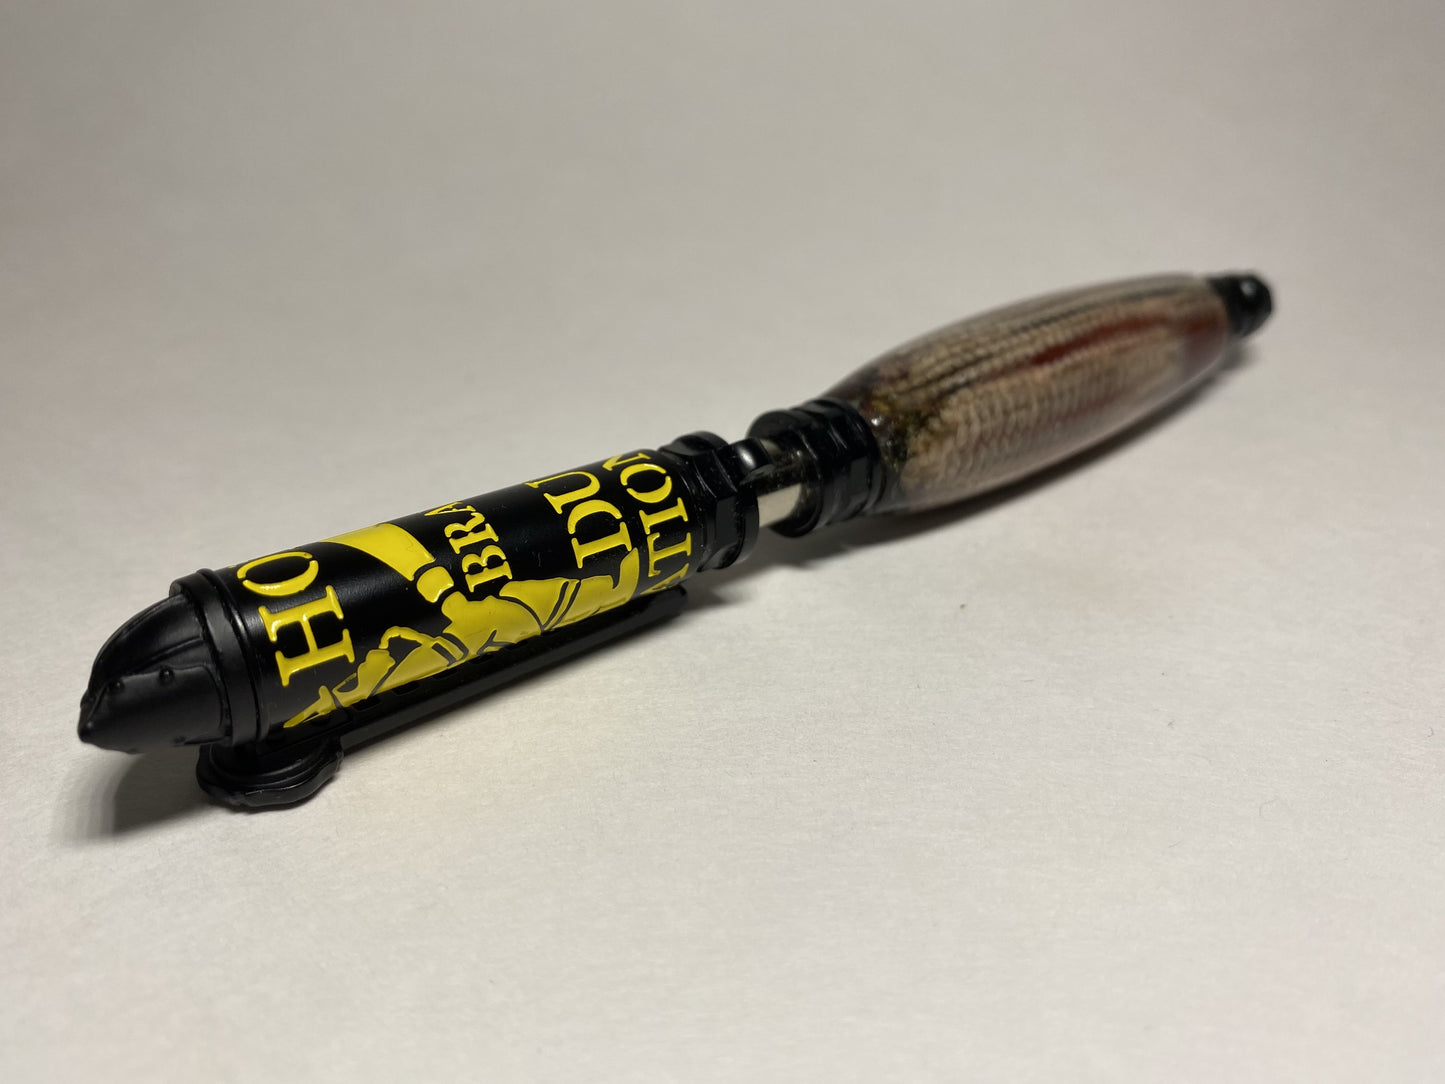 Firehose Ink Pen